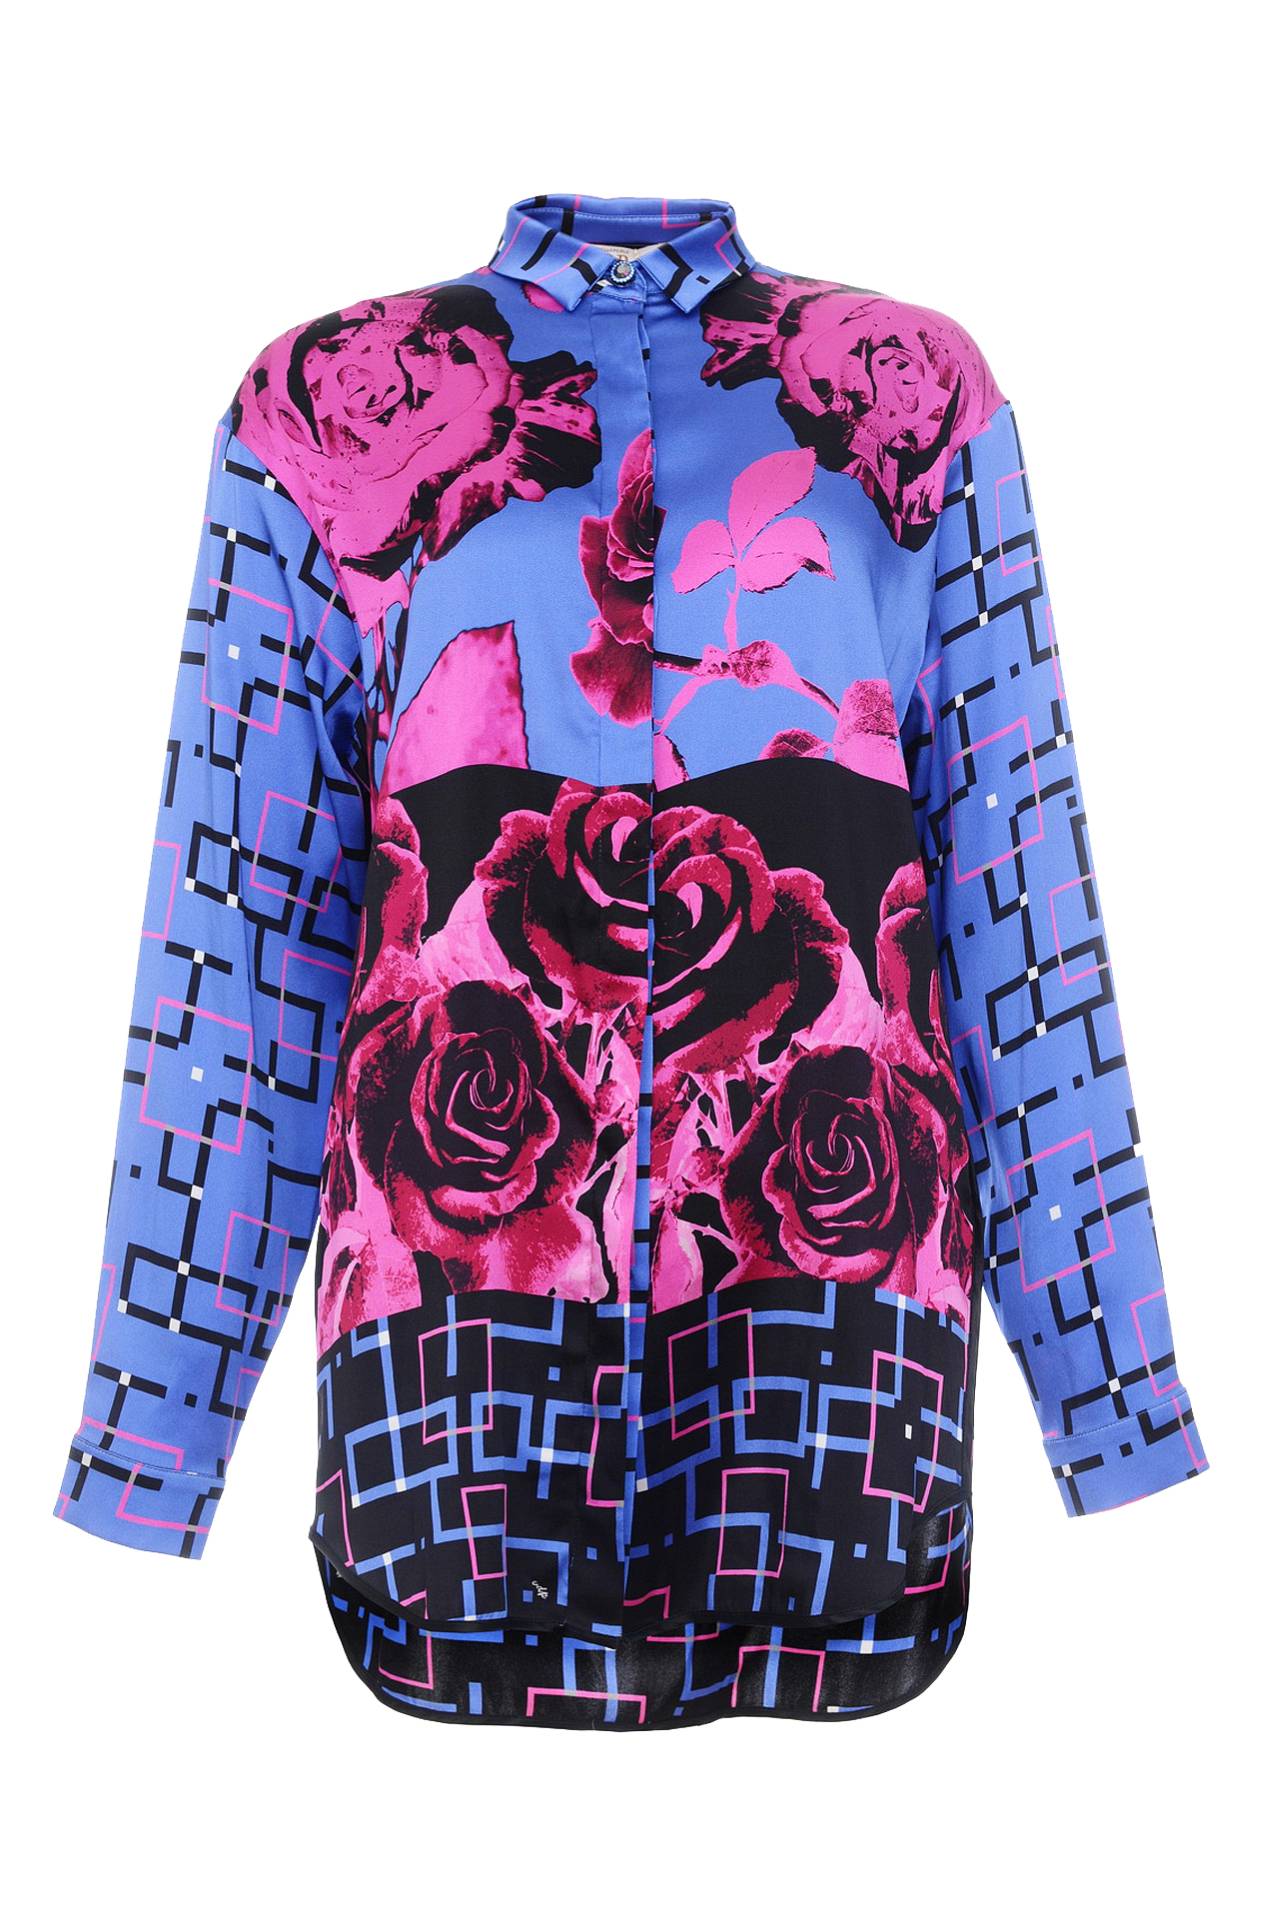 Одежда женская Блузка VDP VIA DELLE PERLE (A5F1228/16.1). Купить за 21300 руб.